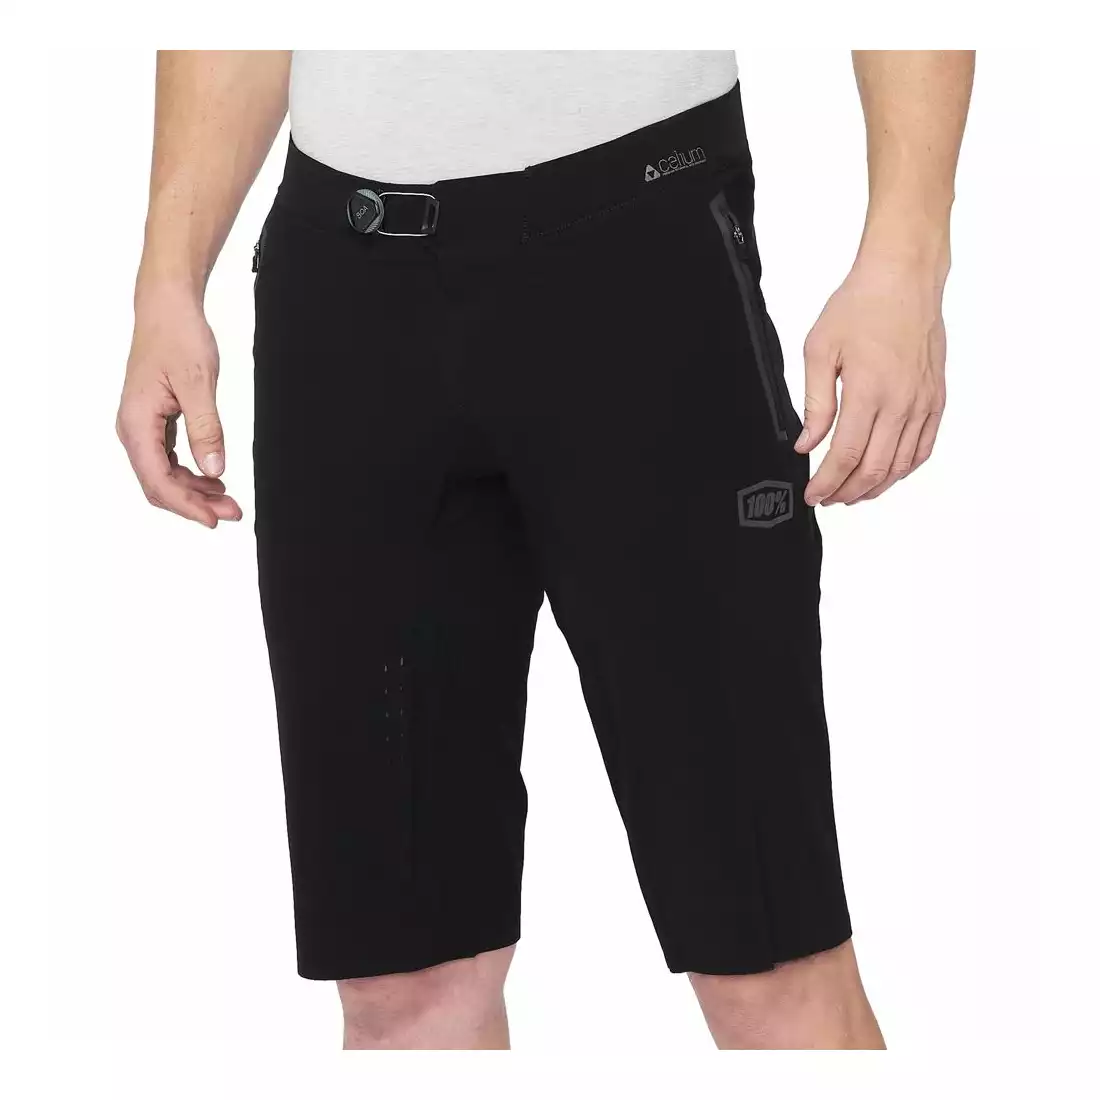 100% CELIUM Men's cycling shorts, black